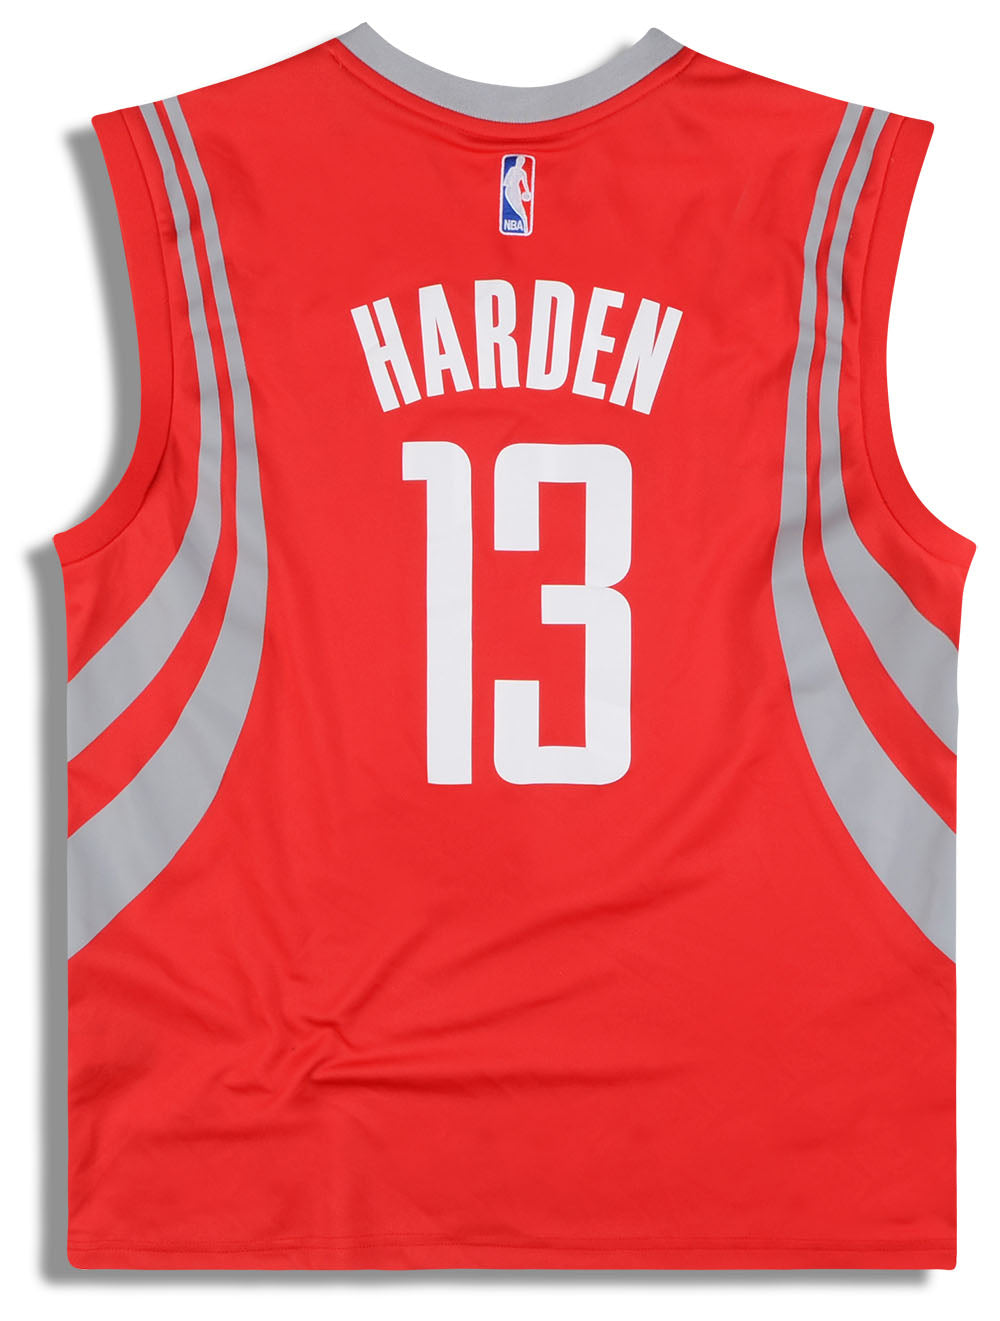 Arizona State Basketball Jersey 13 James Harden Size XL White -  Hong  Kong